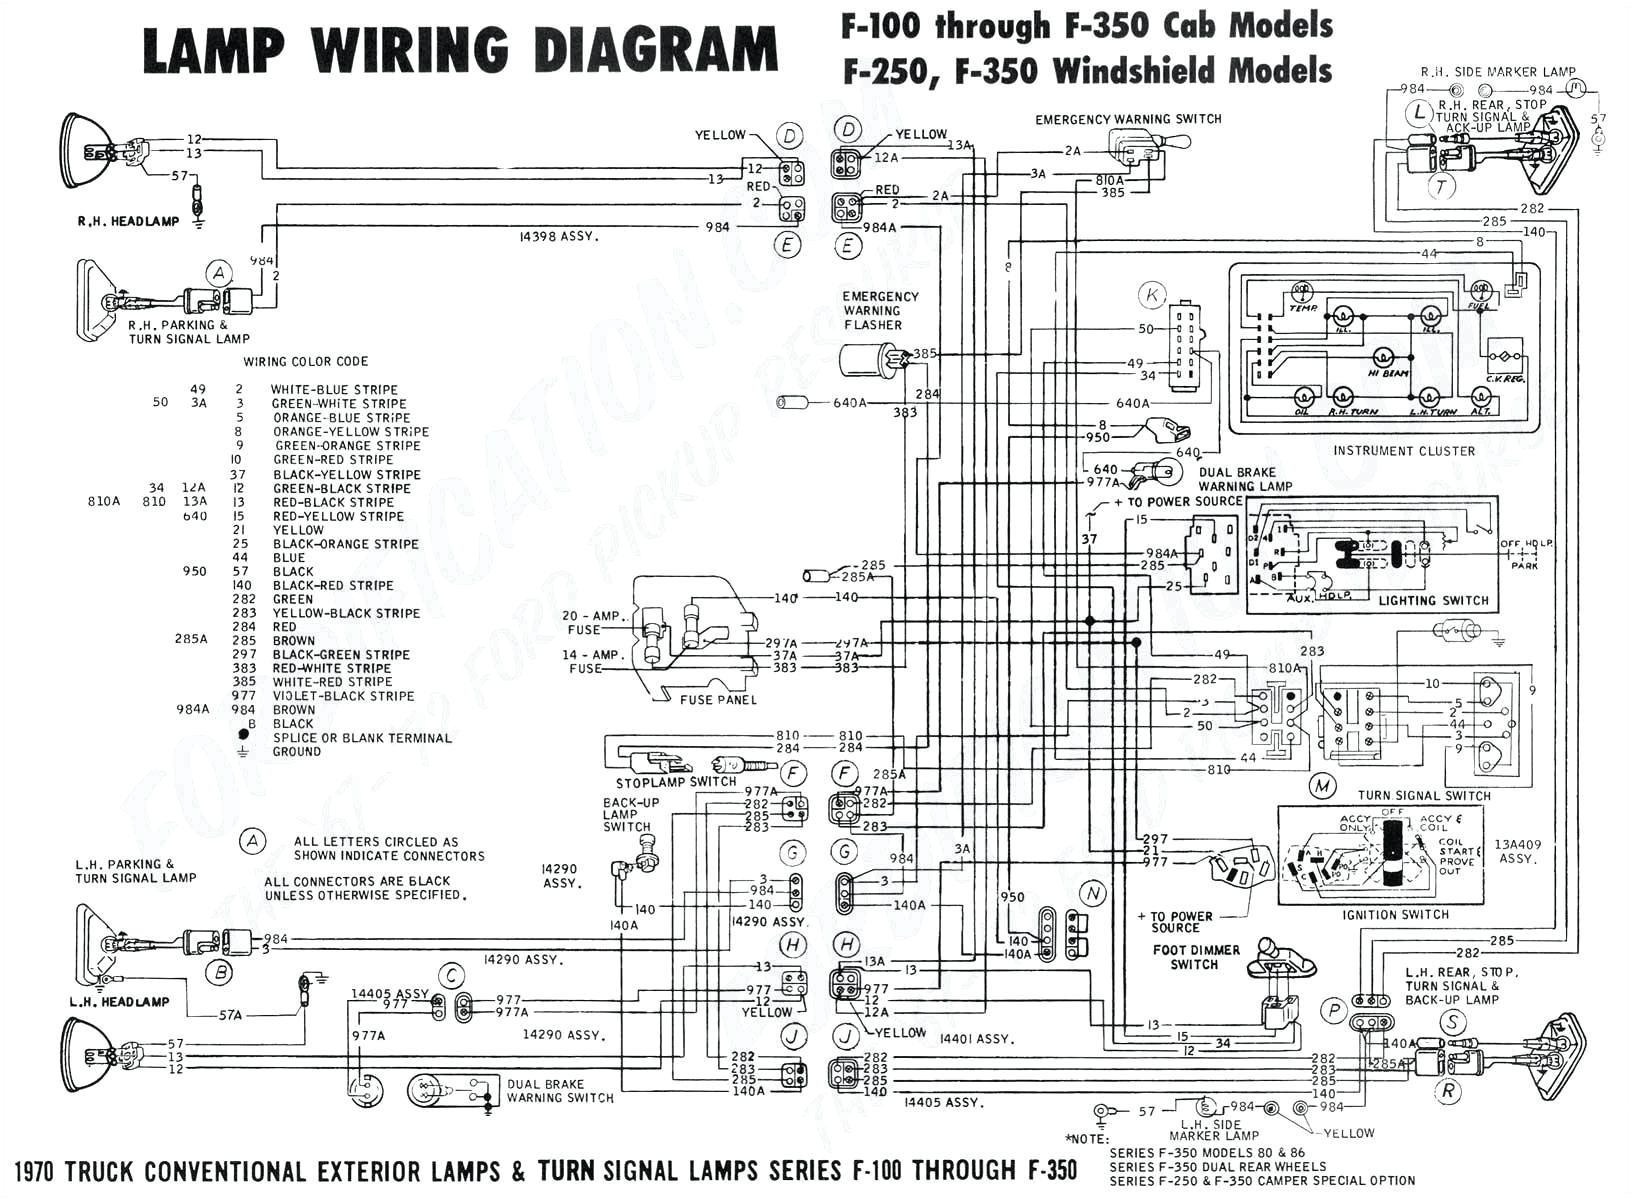 Allis Chalmers B Wiring Diagram 1956 Chrysler Wiring Diagram Wiring Diagram toolbox